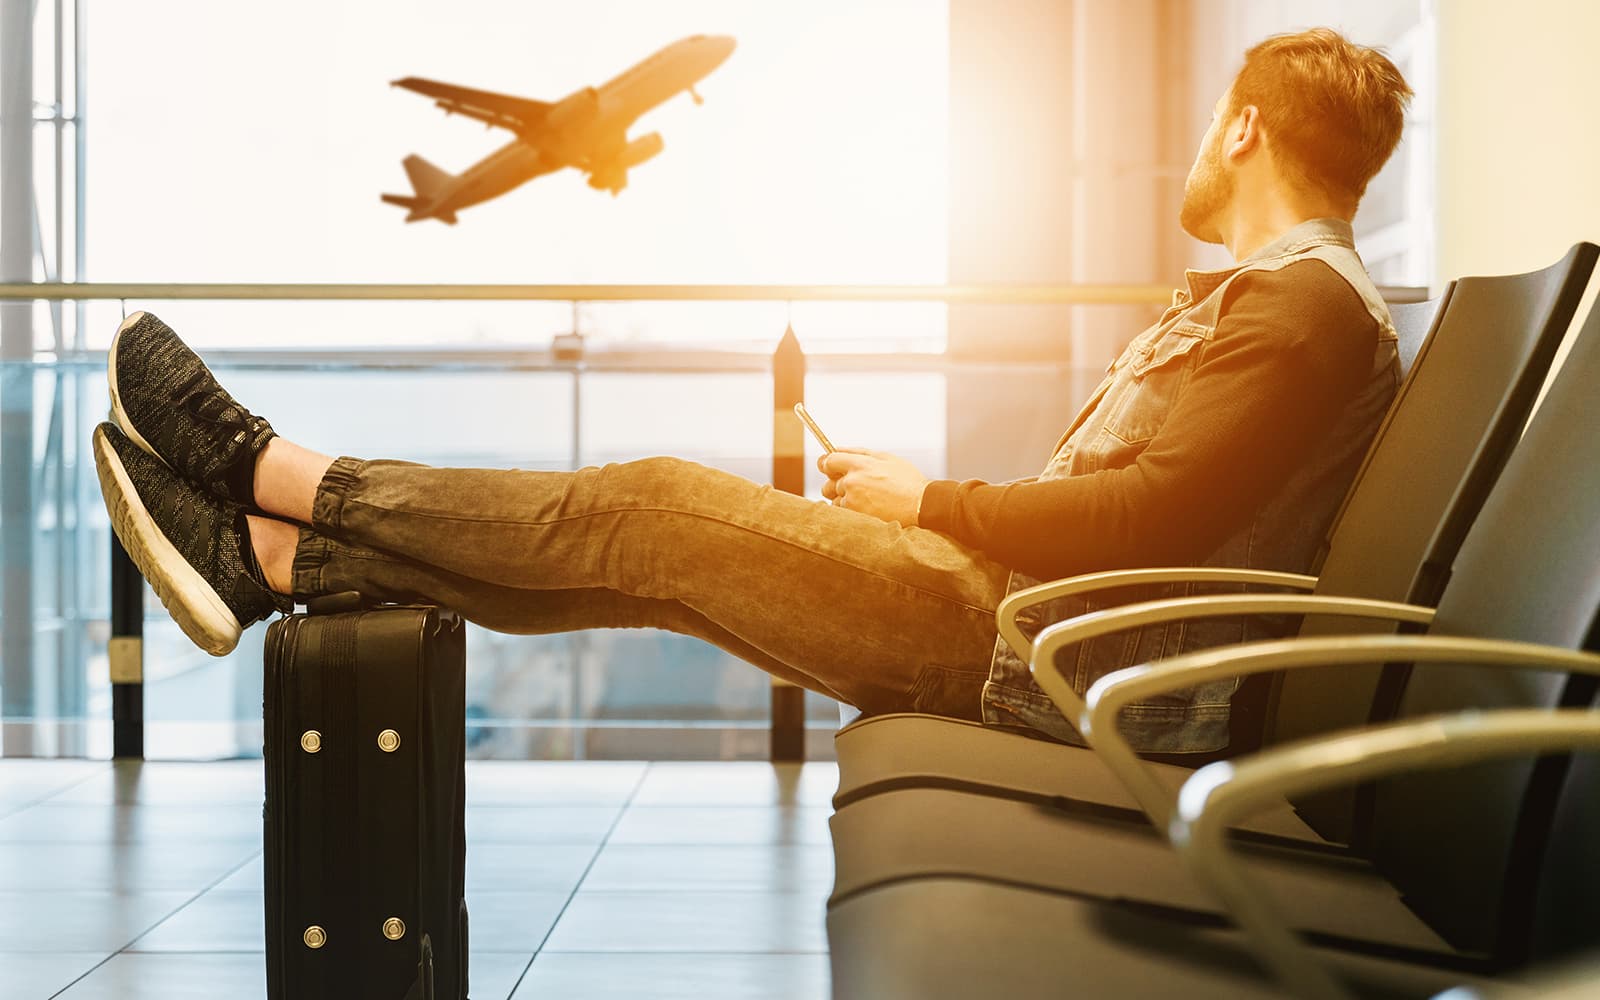 Man staring at departing airplane at the airport